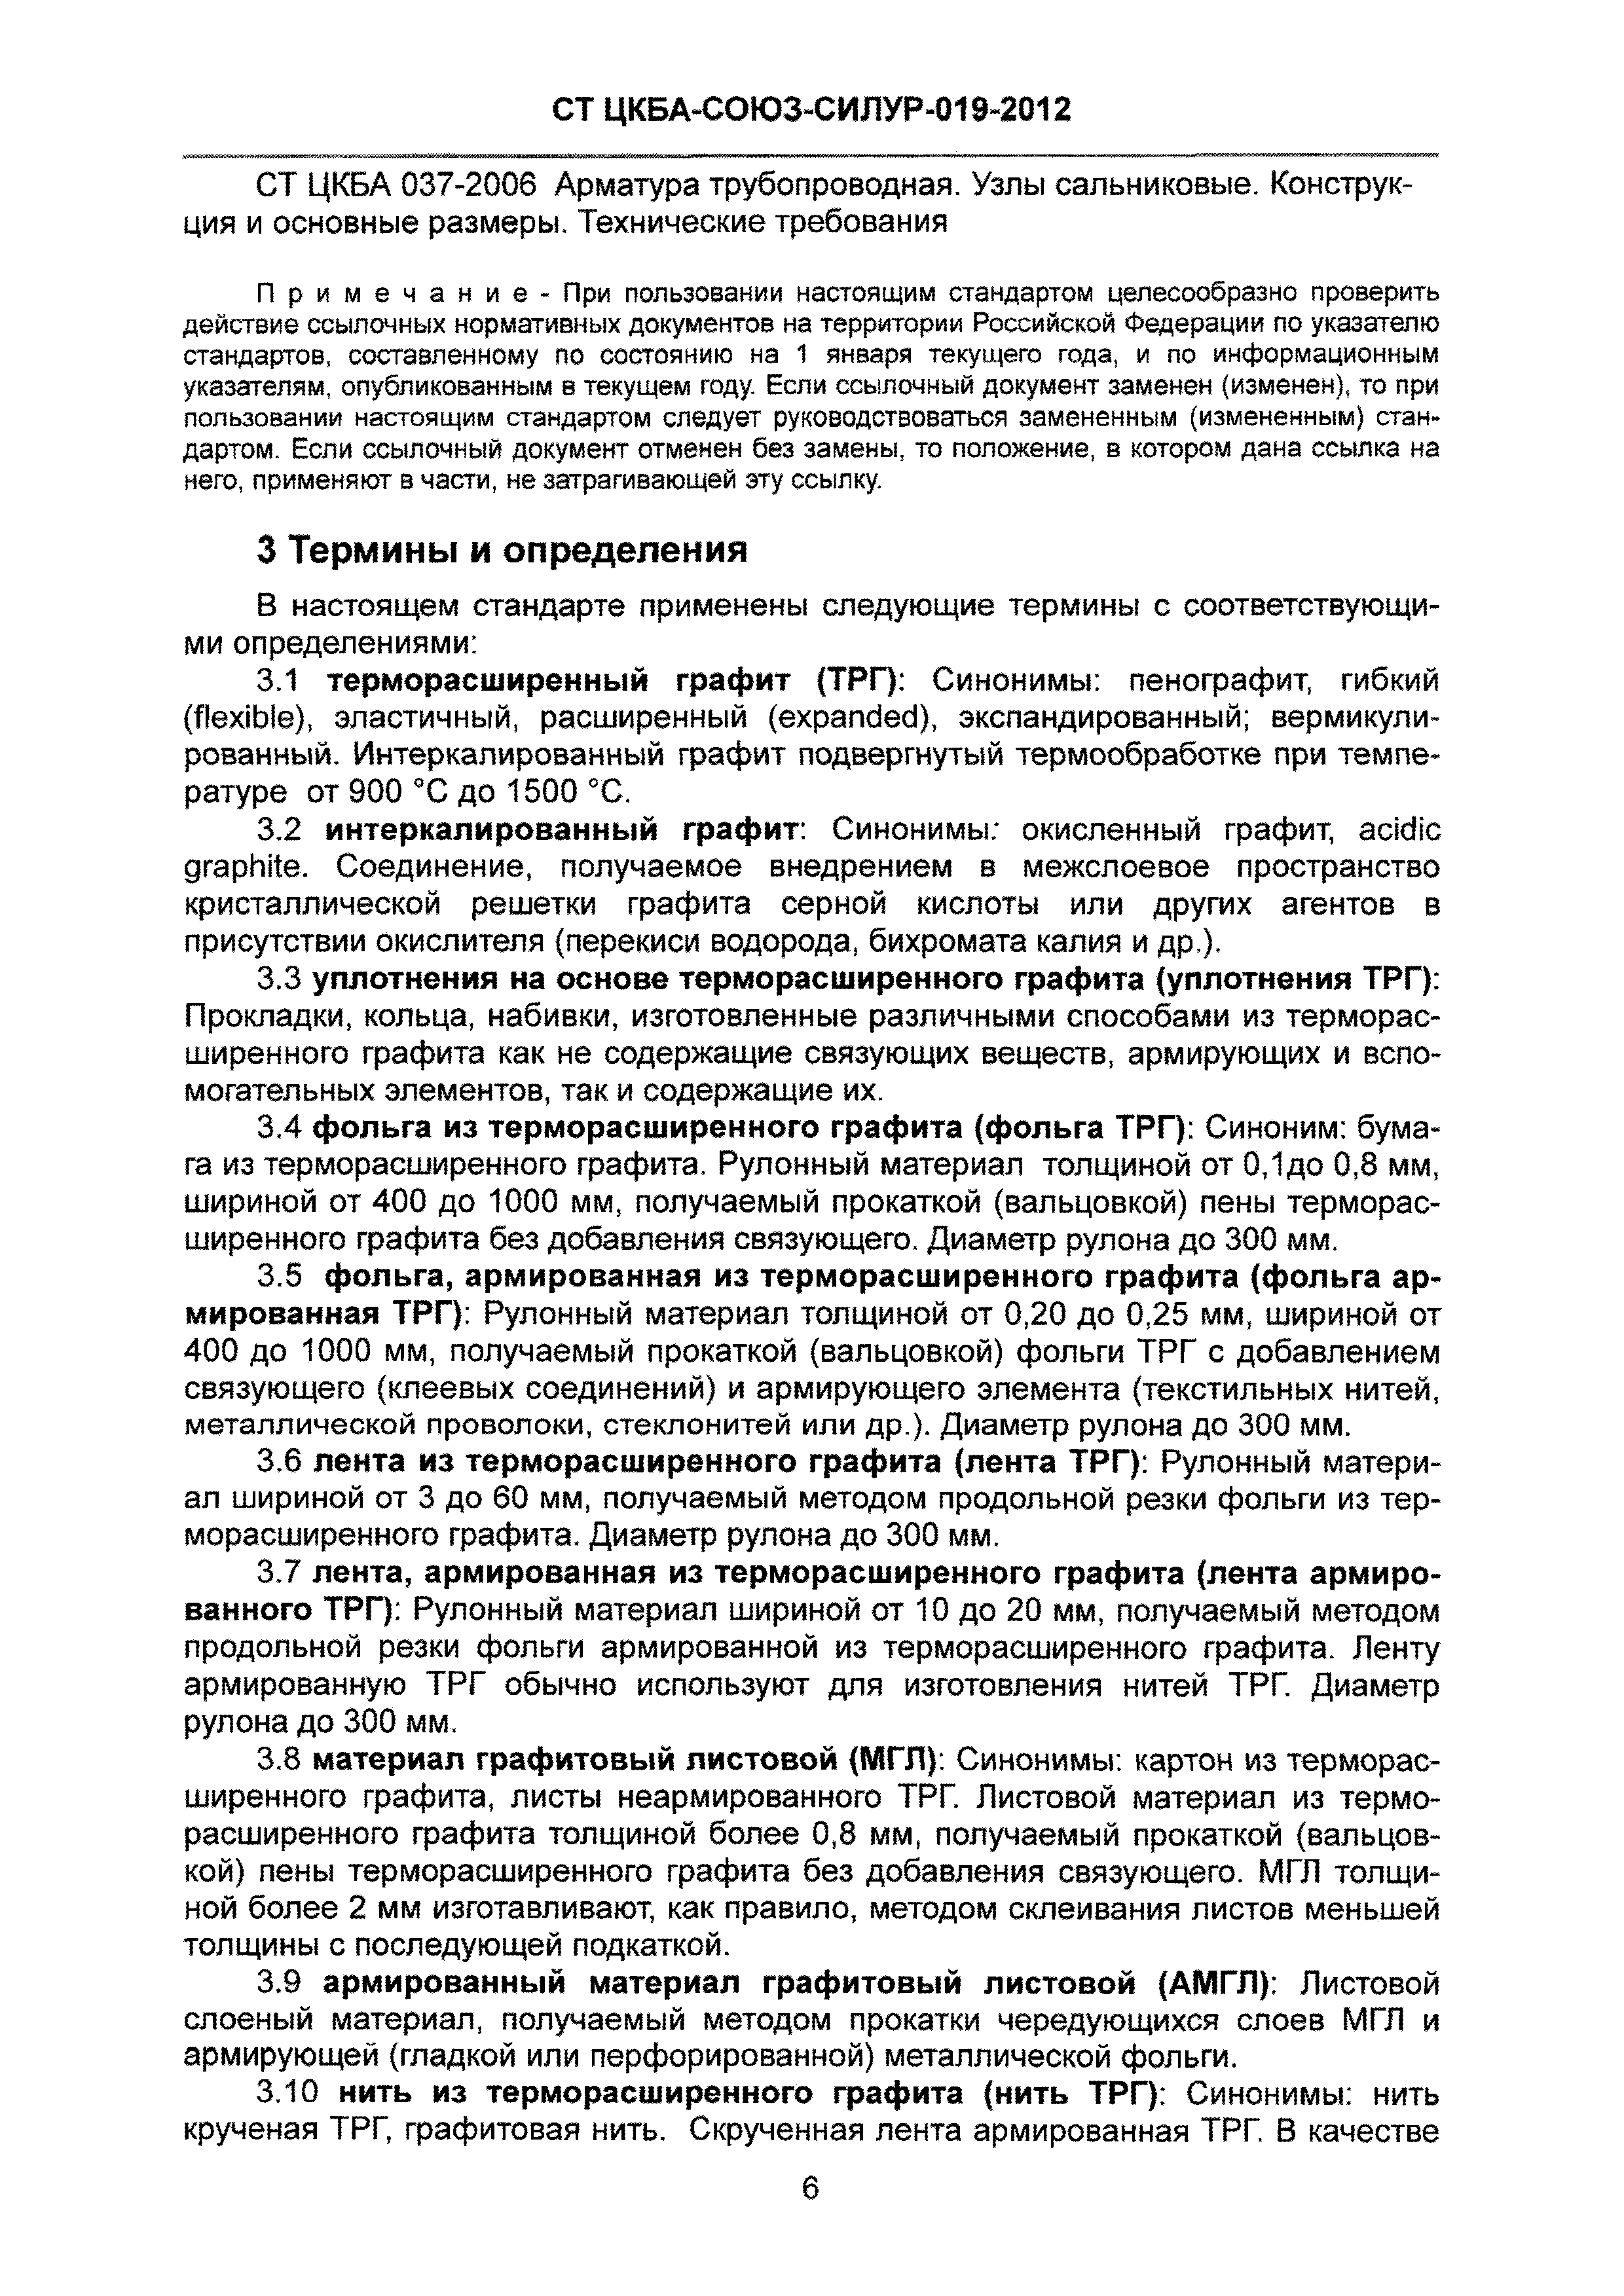 СТ ЦКБА 019-2012